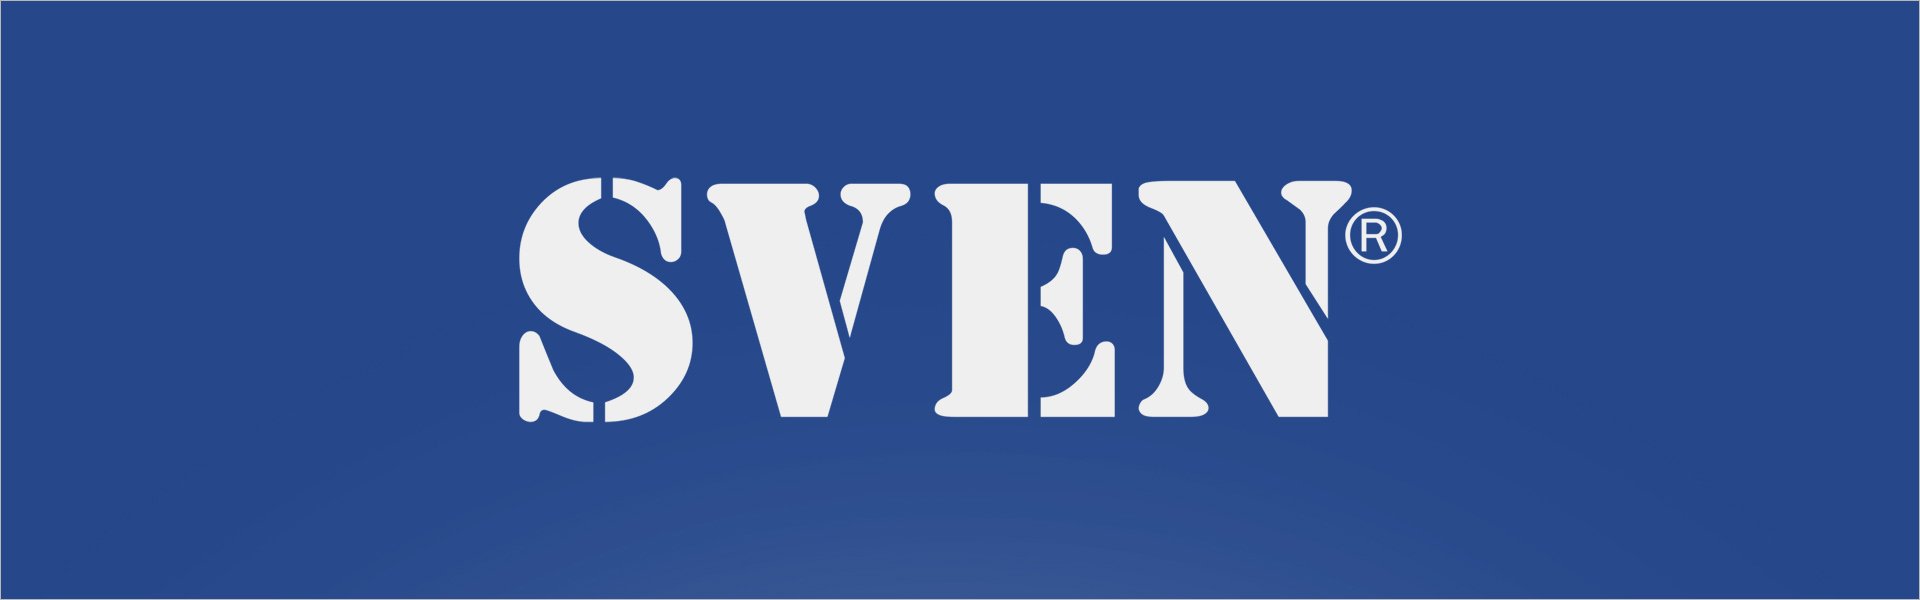 Sven 248, must Sven